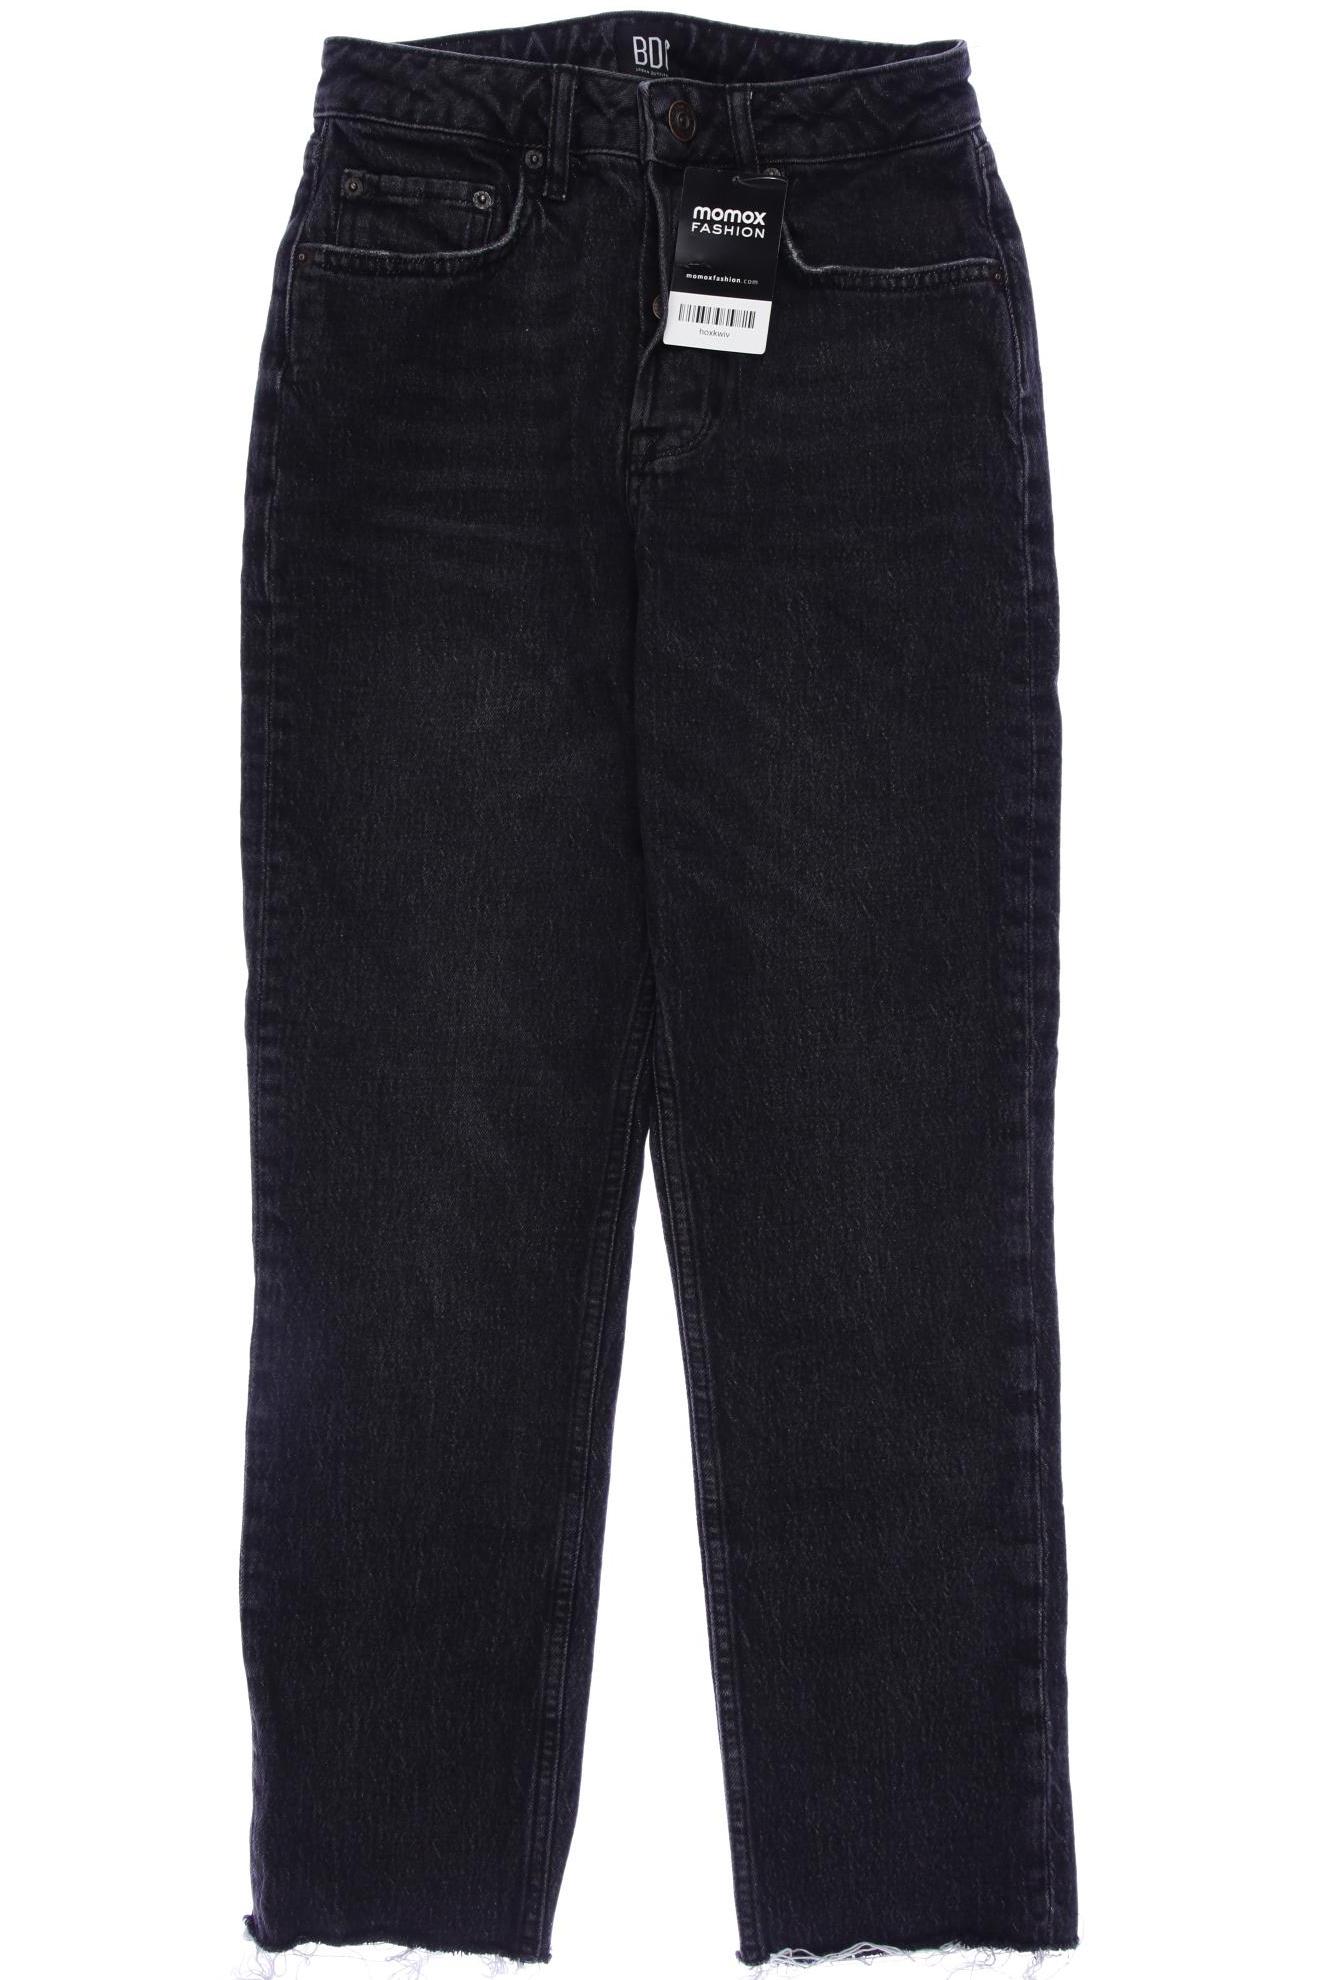 BDG Urban Outfitters Damen Jeans, schwarz, Gr. 38 von BDG Urban Outfitters